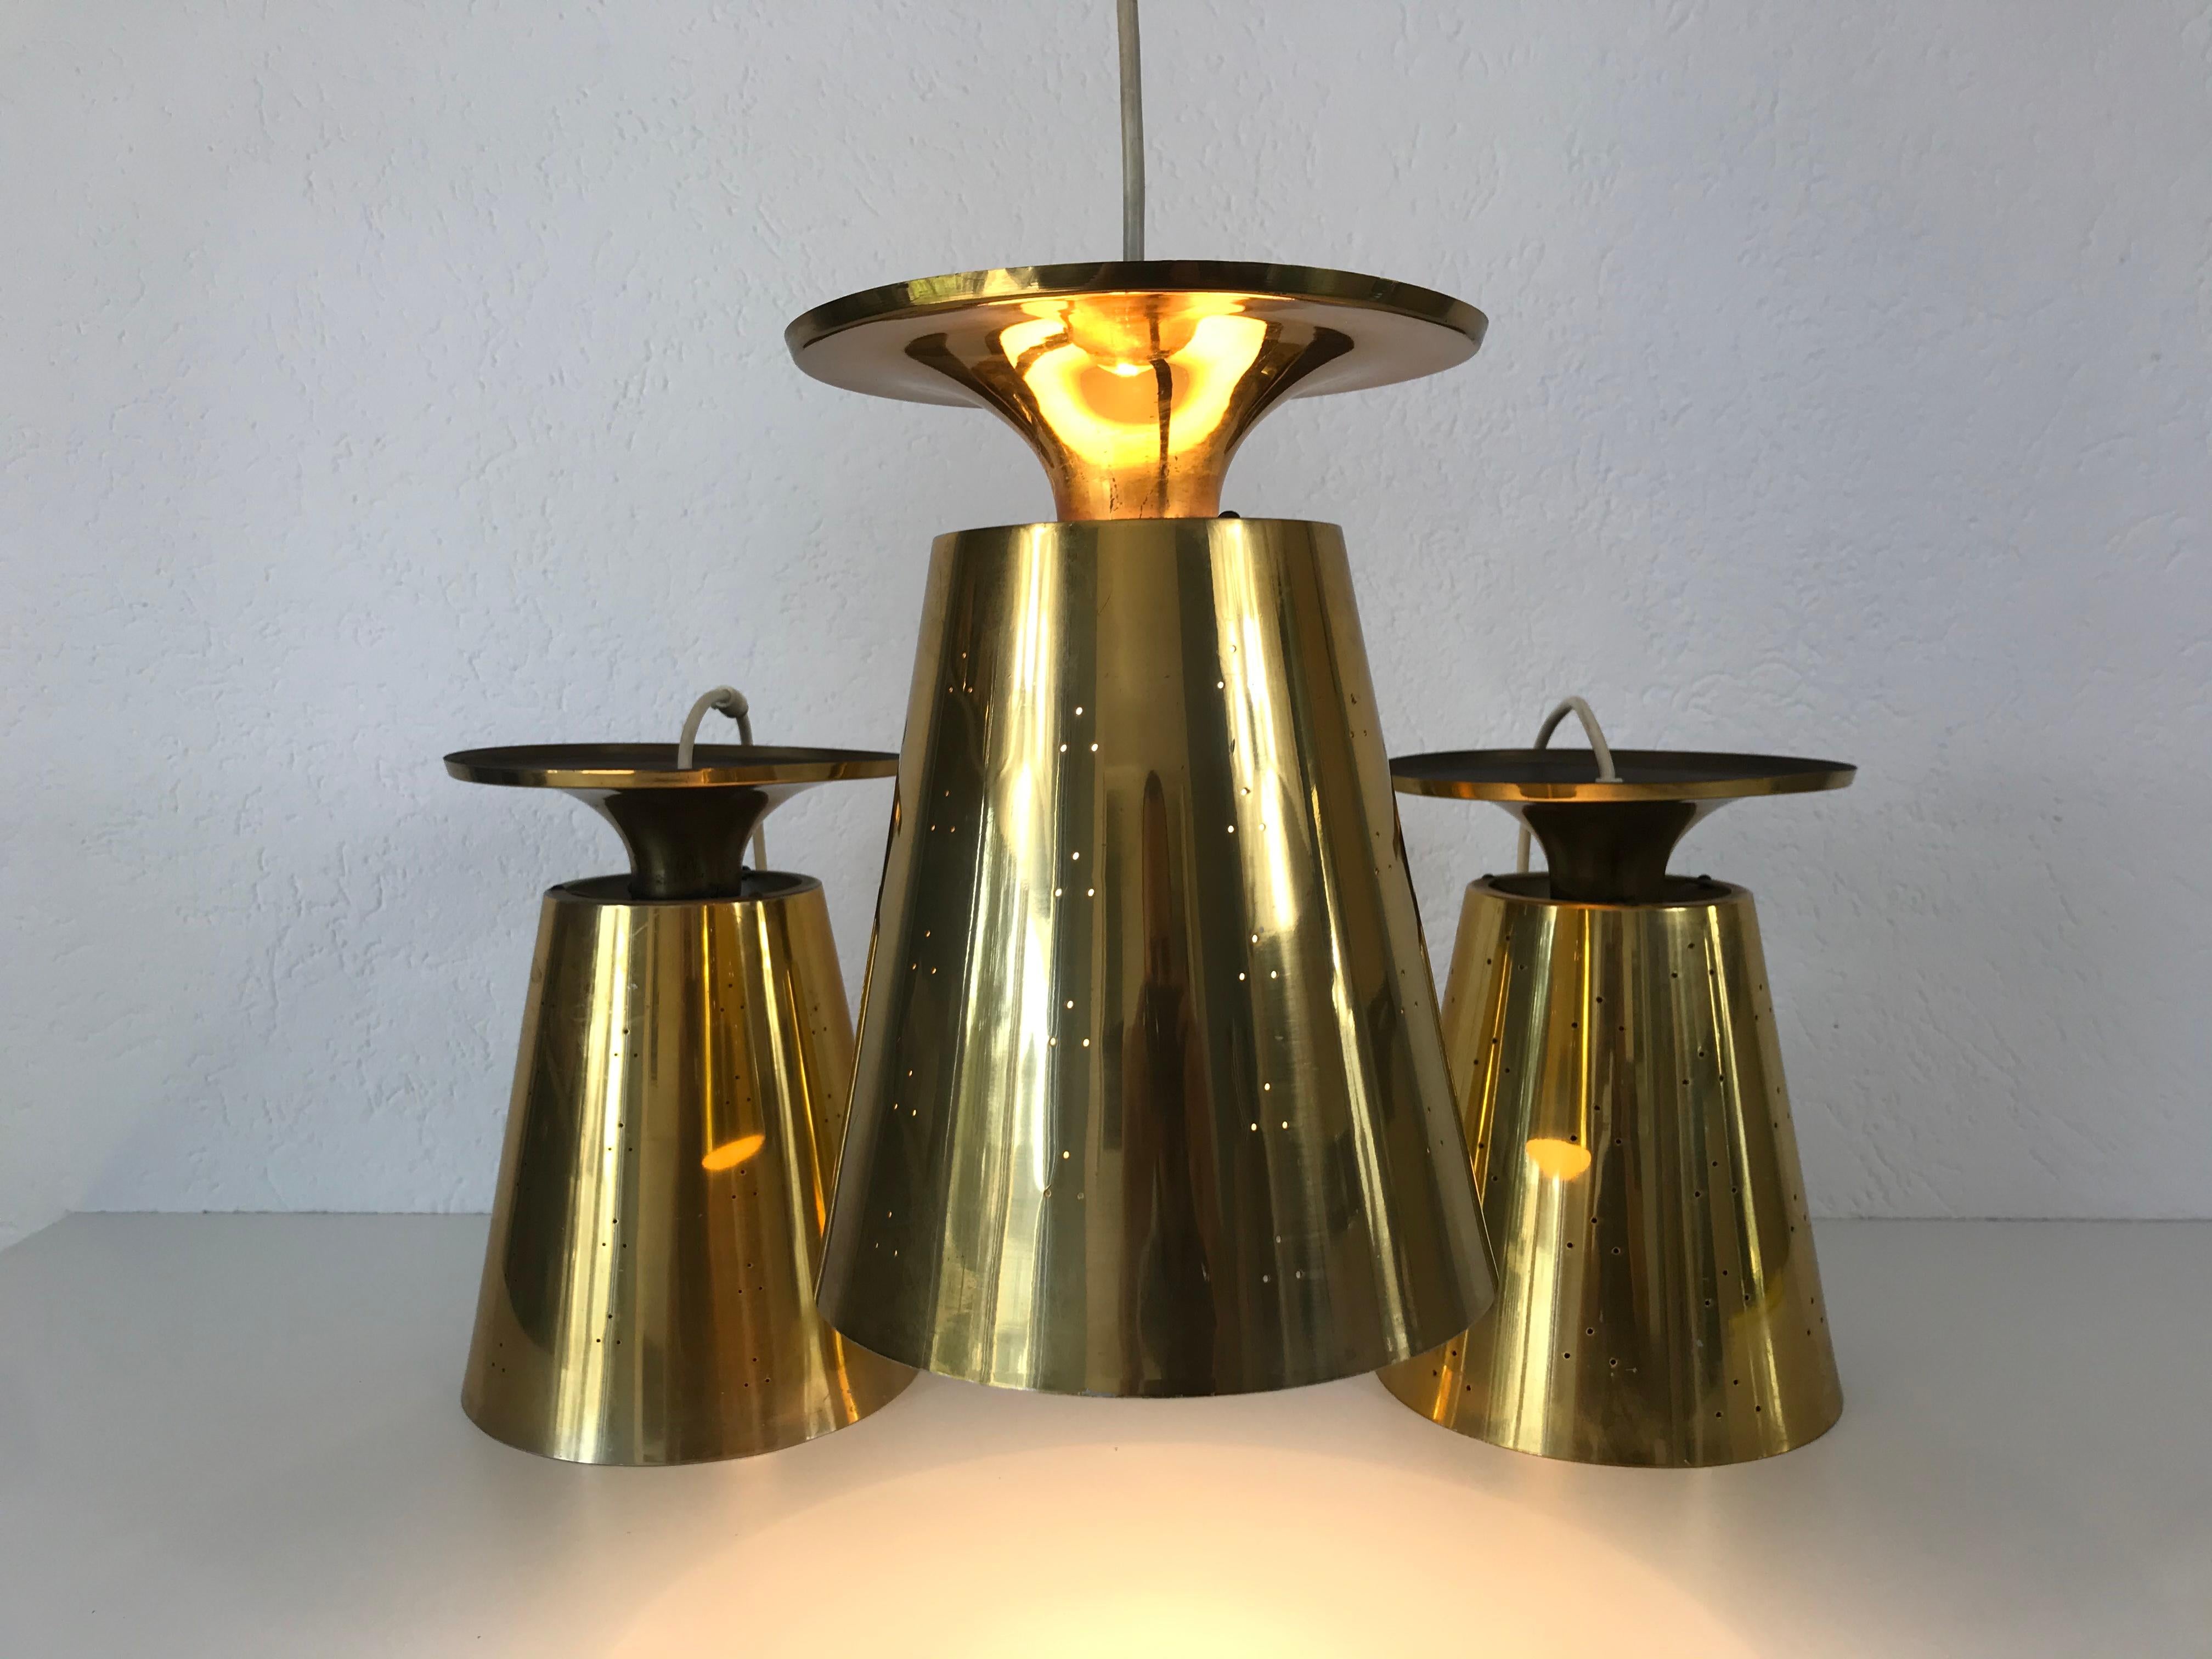 Set of 3 Polished Full Brass Mid-Century Modern Pendant Lamps by Stilnovo, 1950s 1